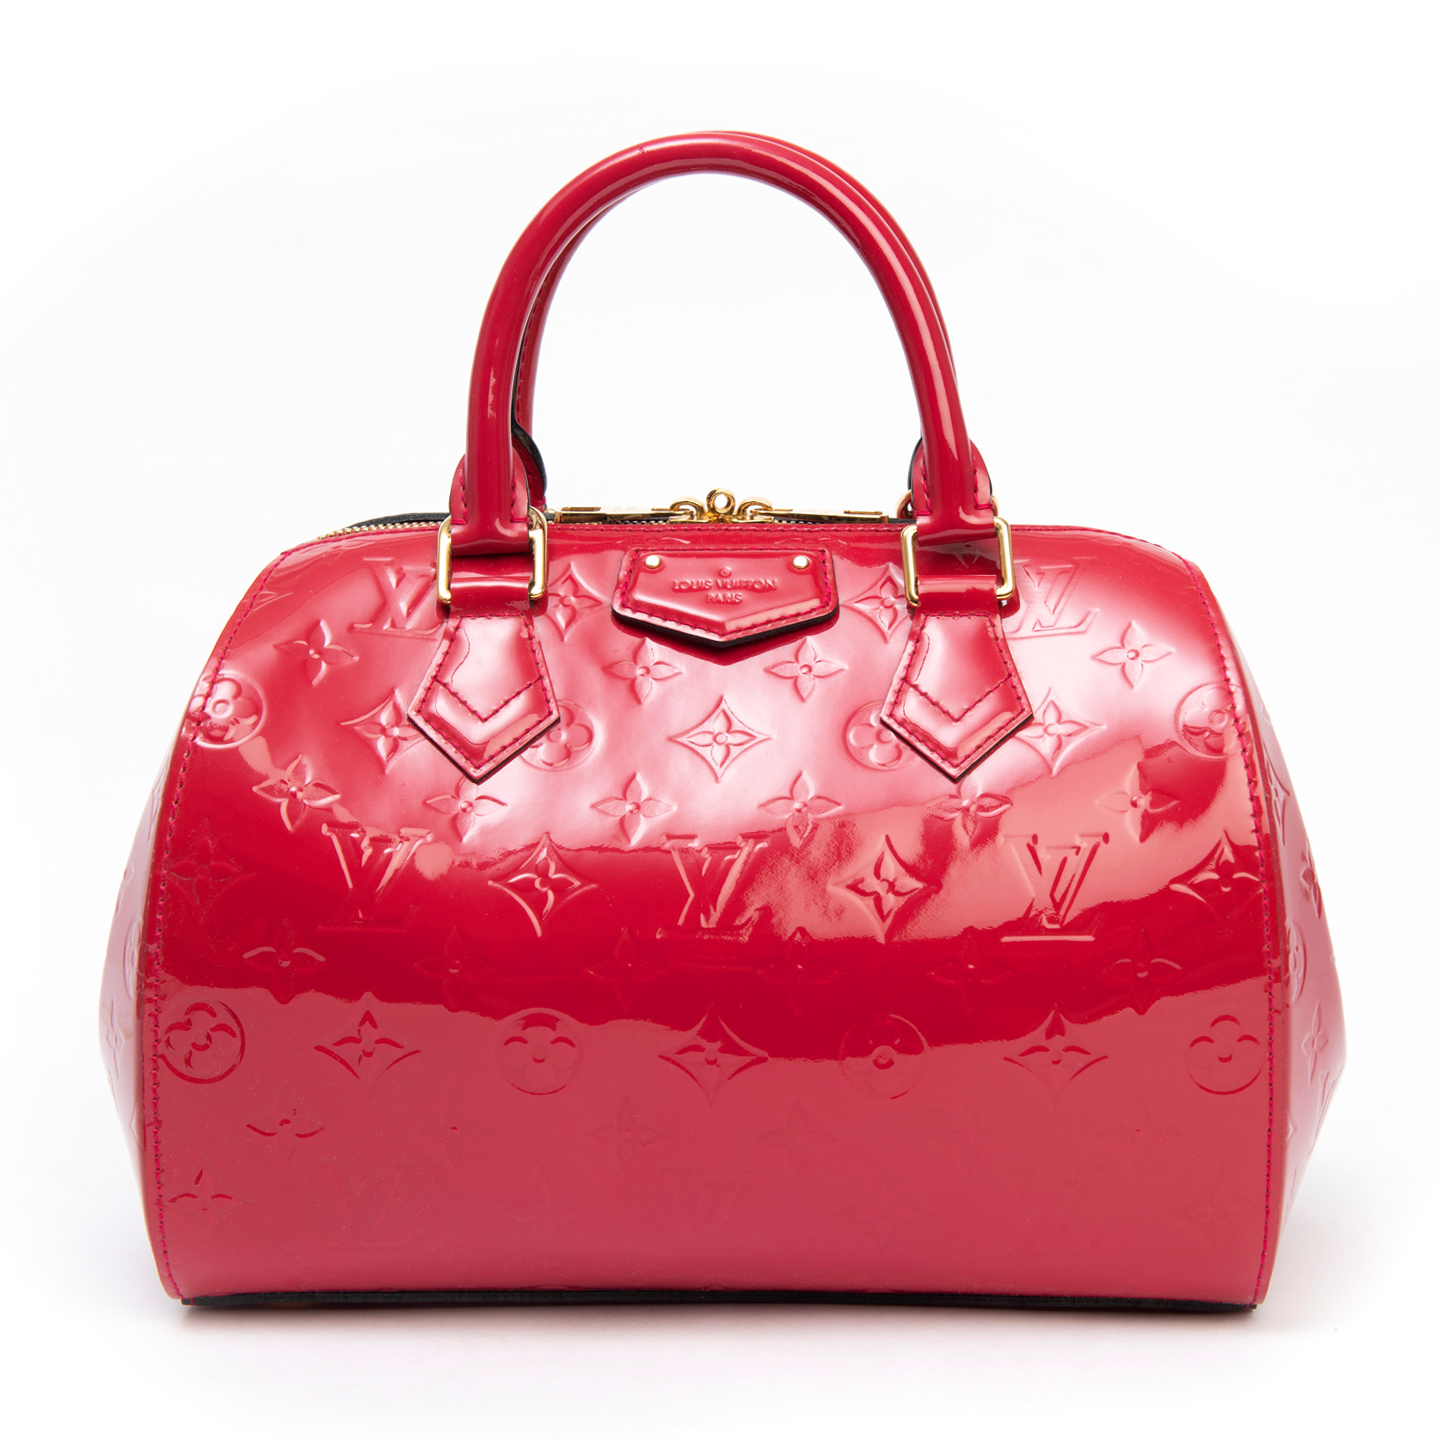 Louis Vuitton Bag Monogram - Red Rose Paris